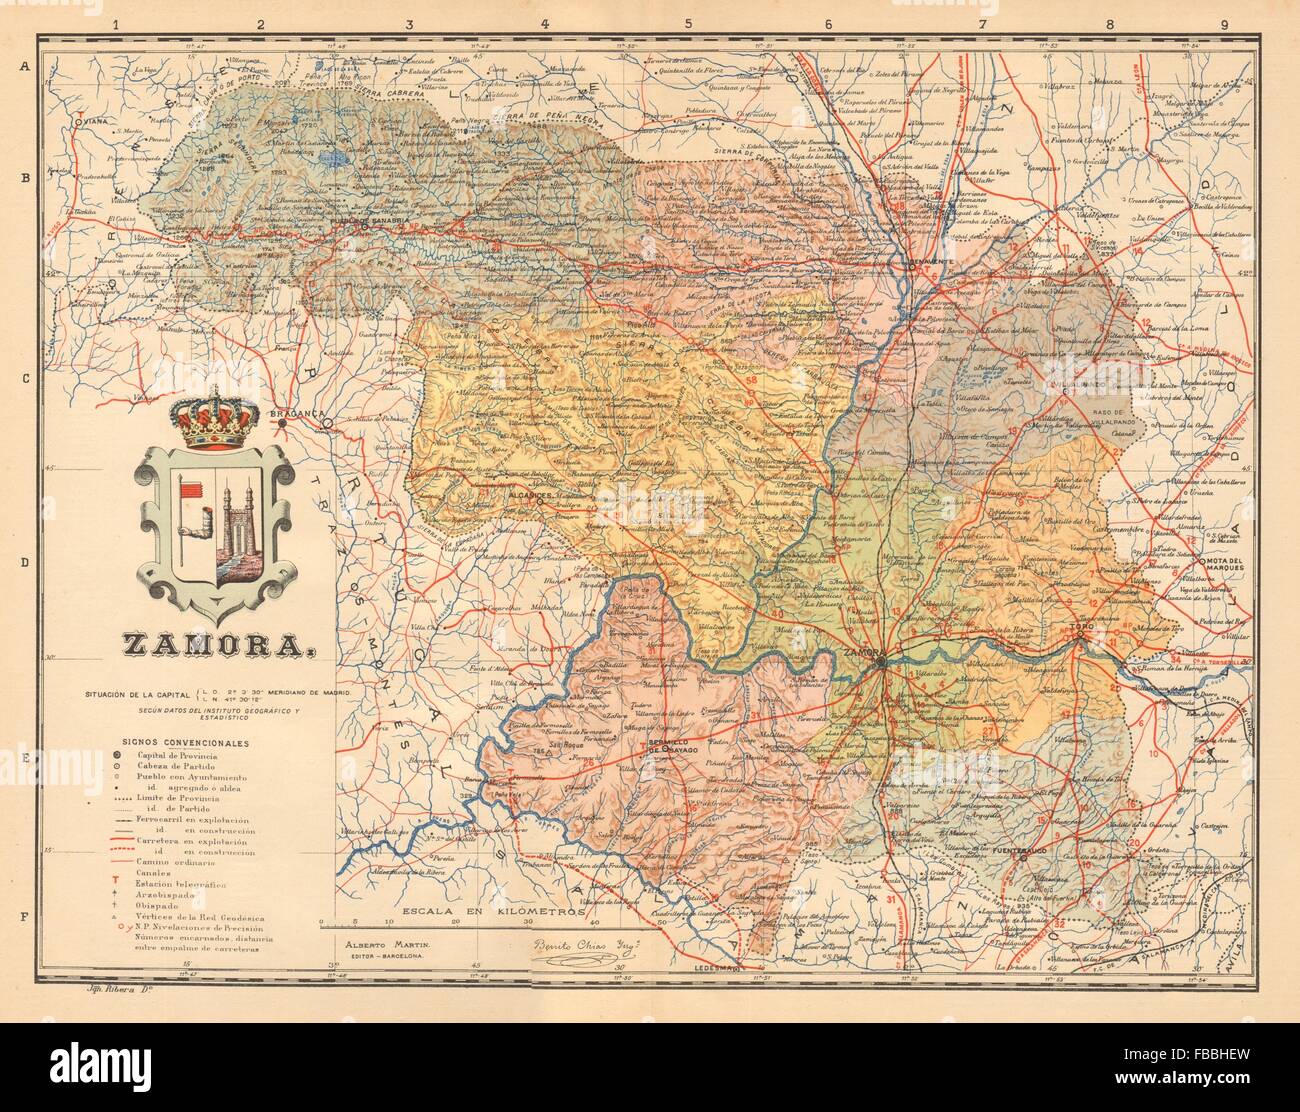 ZAMORA. Castilla y León. Mapa antiguo de la provincia. ALBERTO MARTIN, c1911 Stock Photo